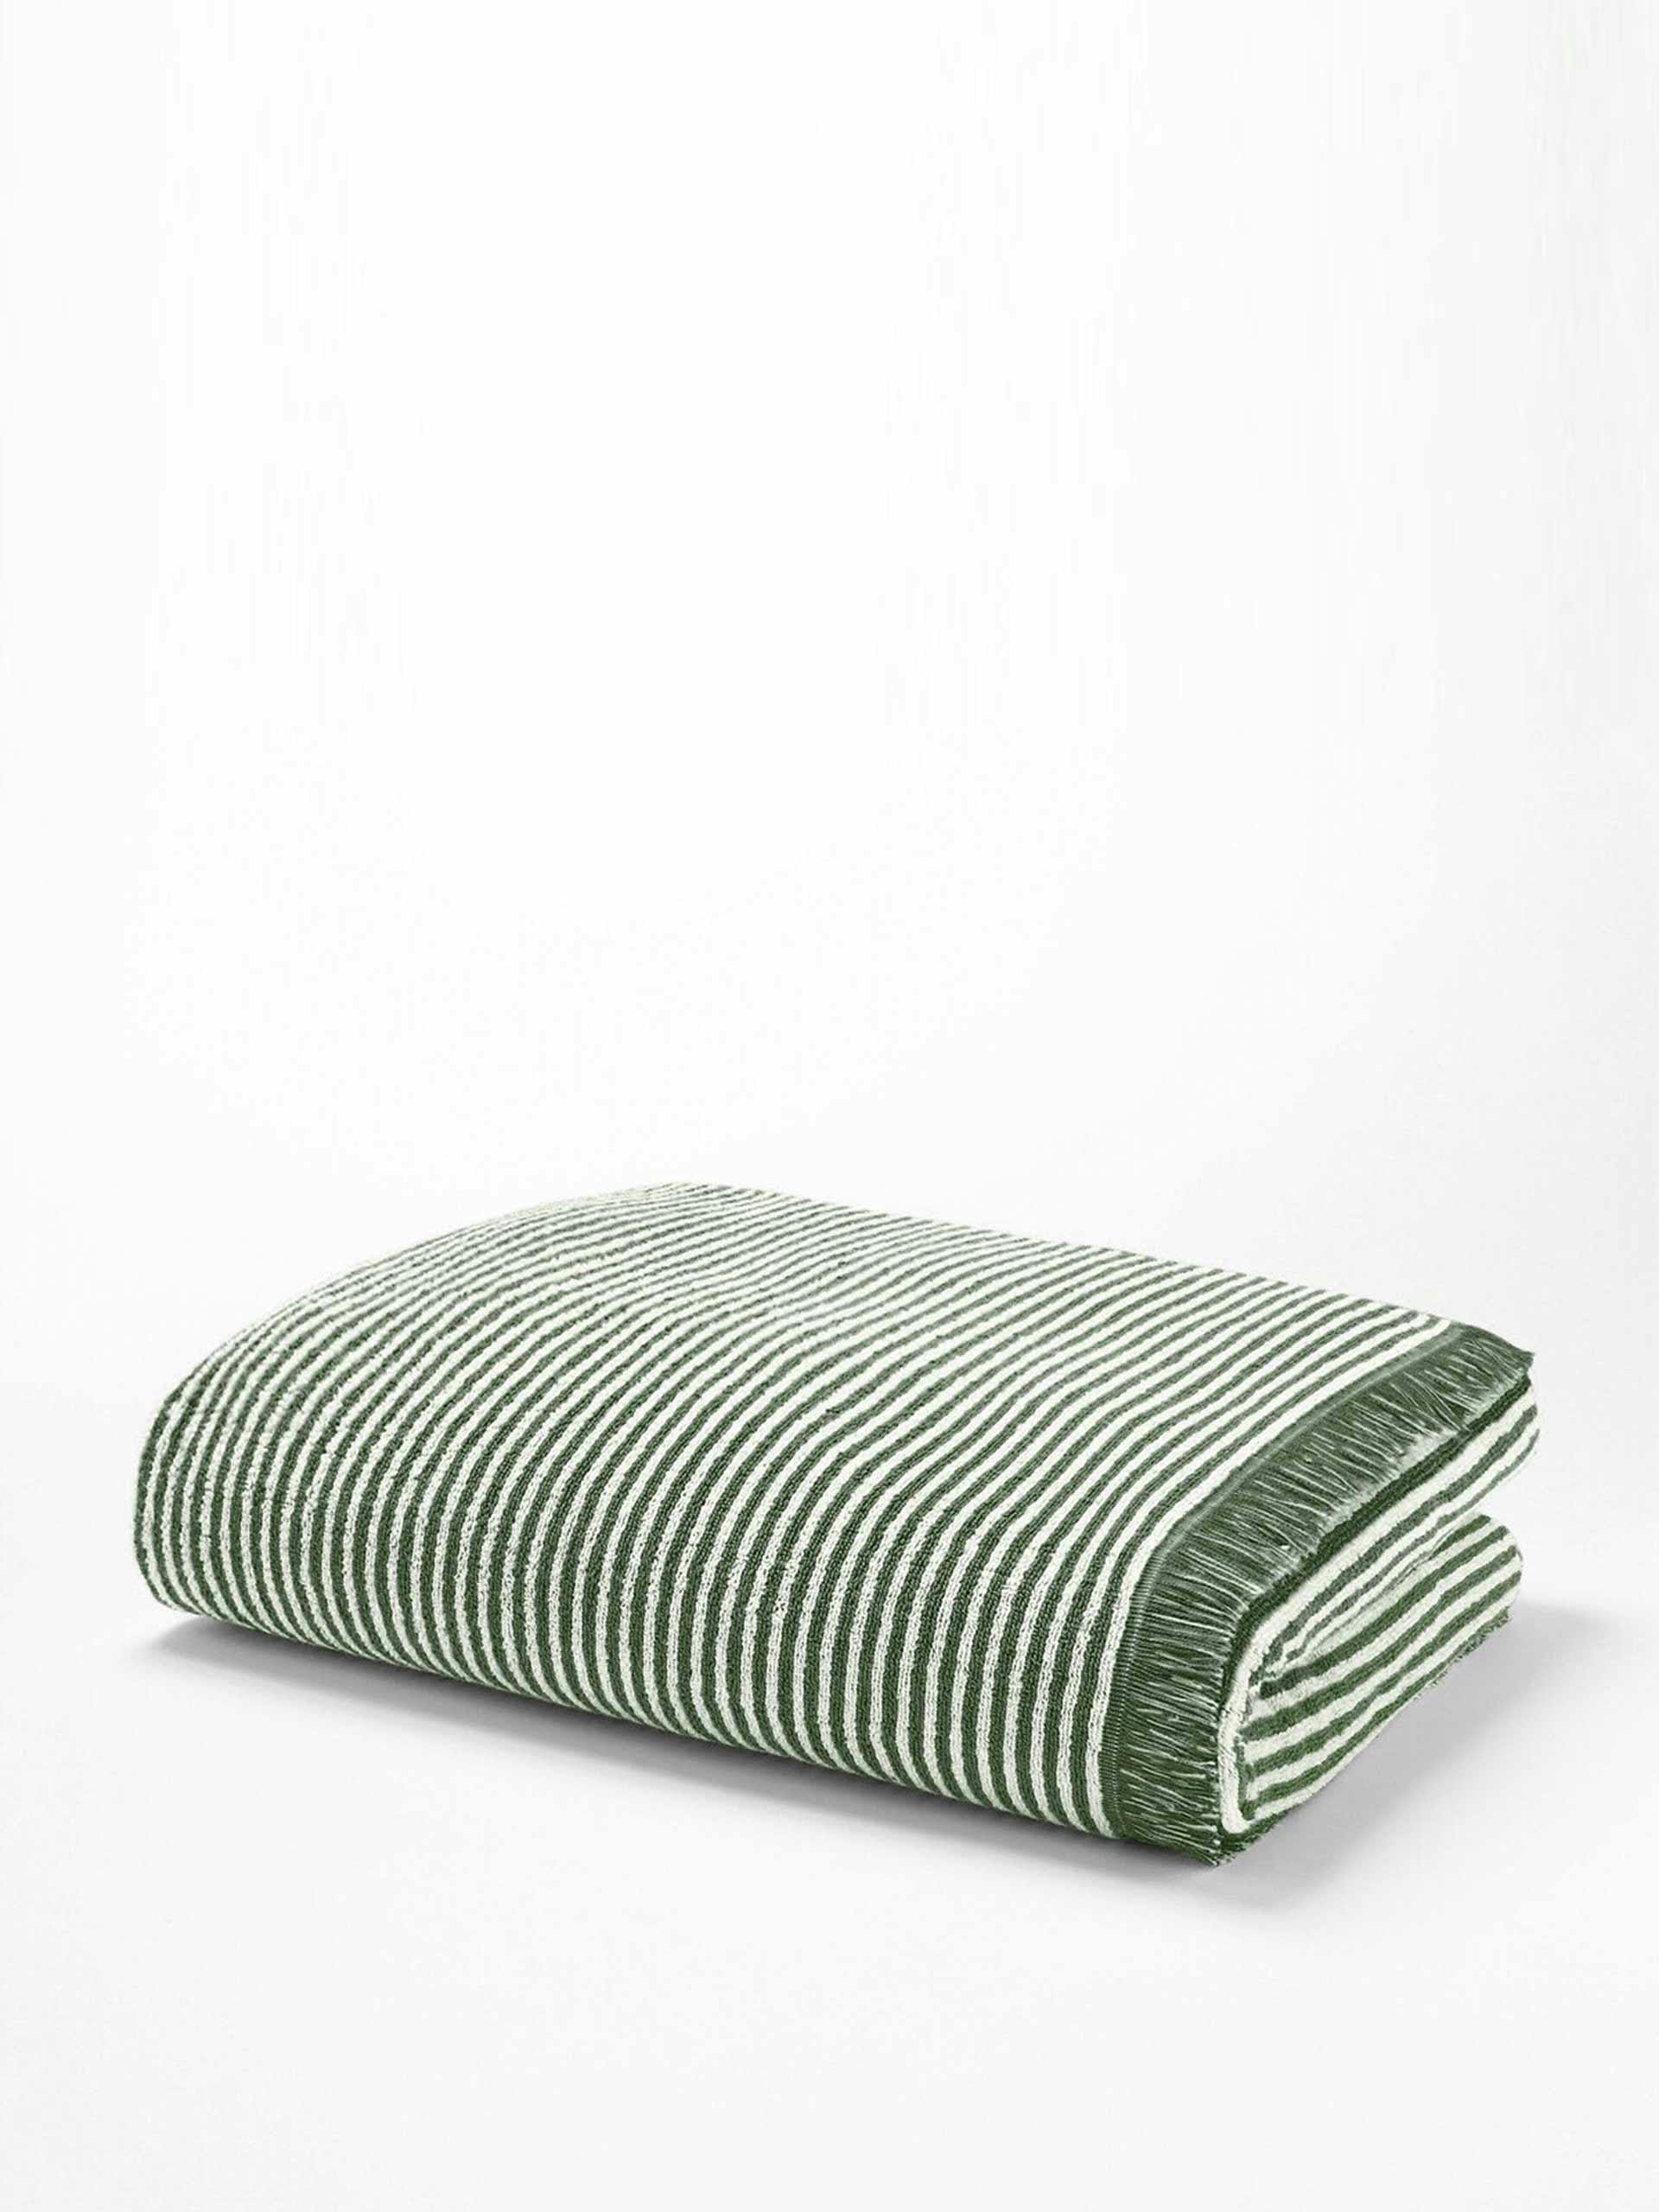 Green striped cotton bath towel